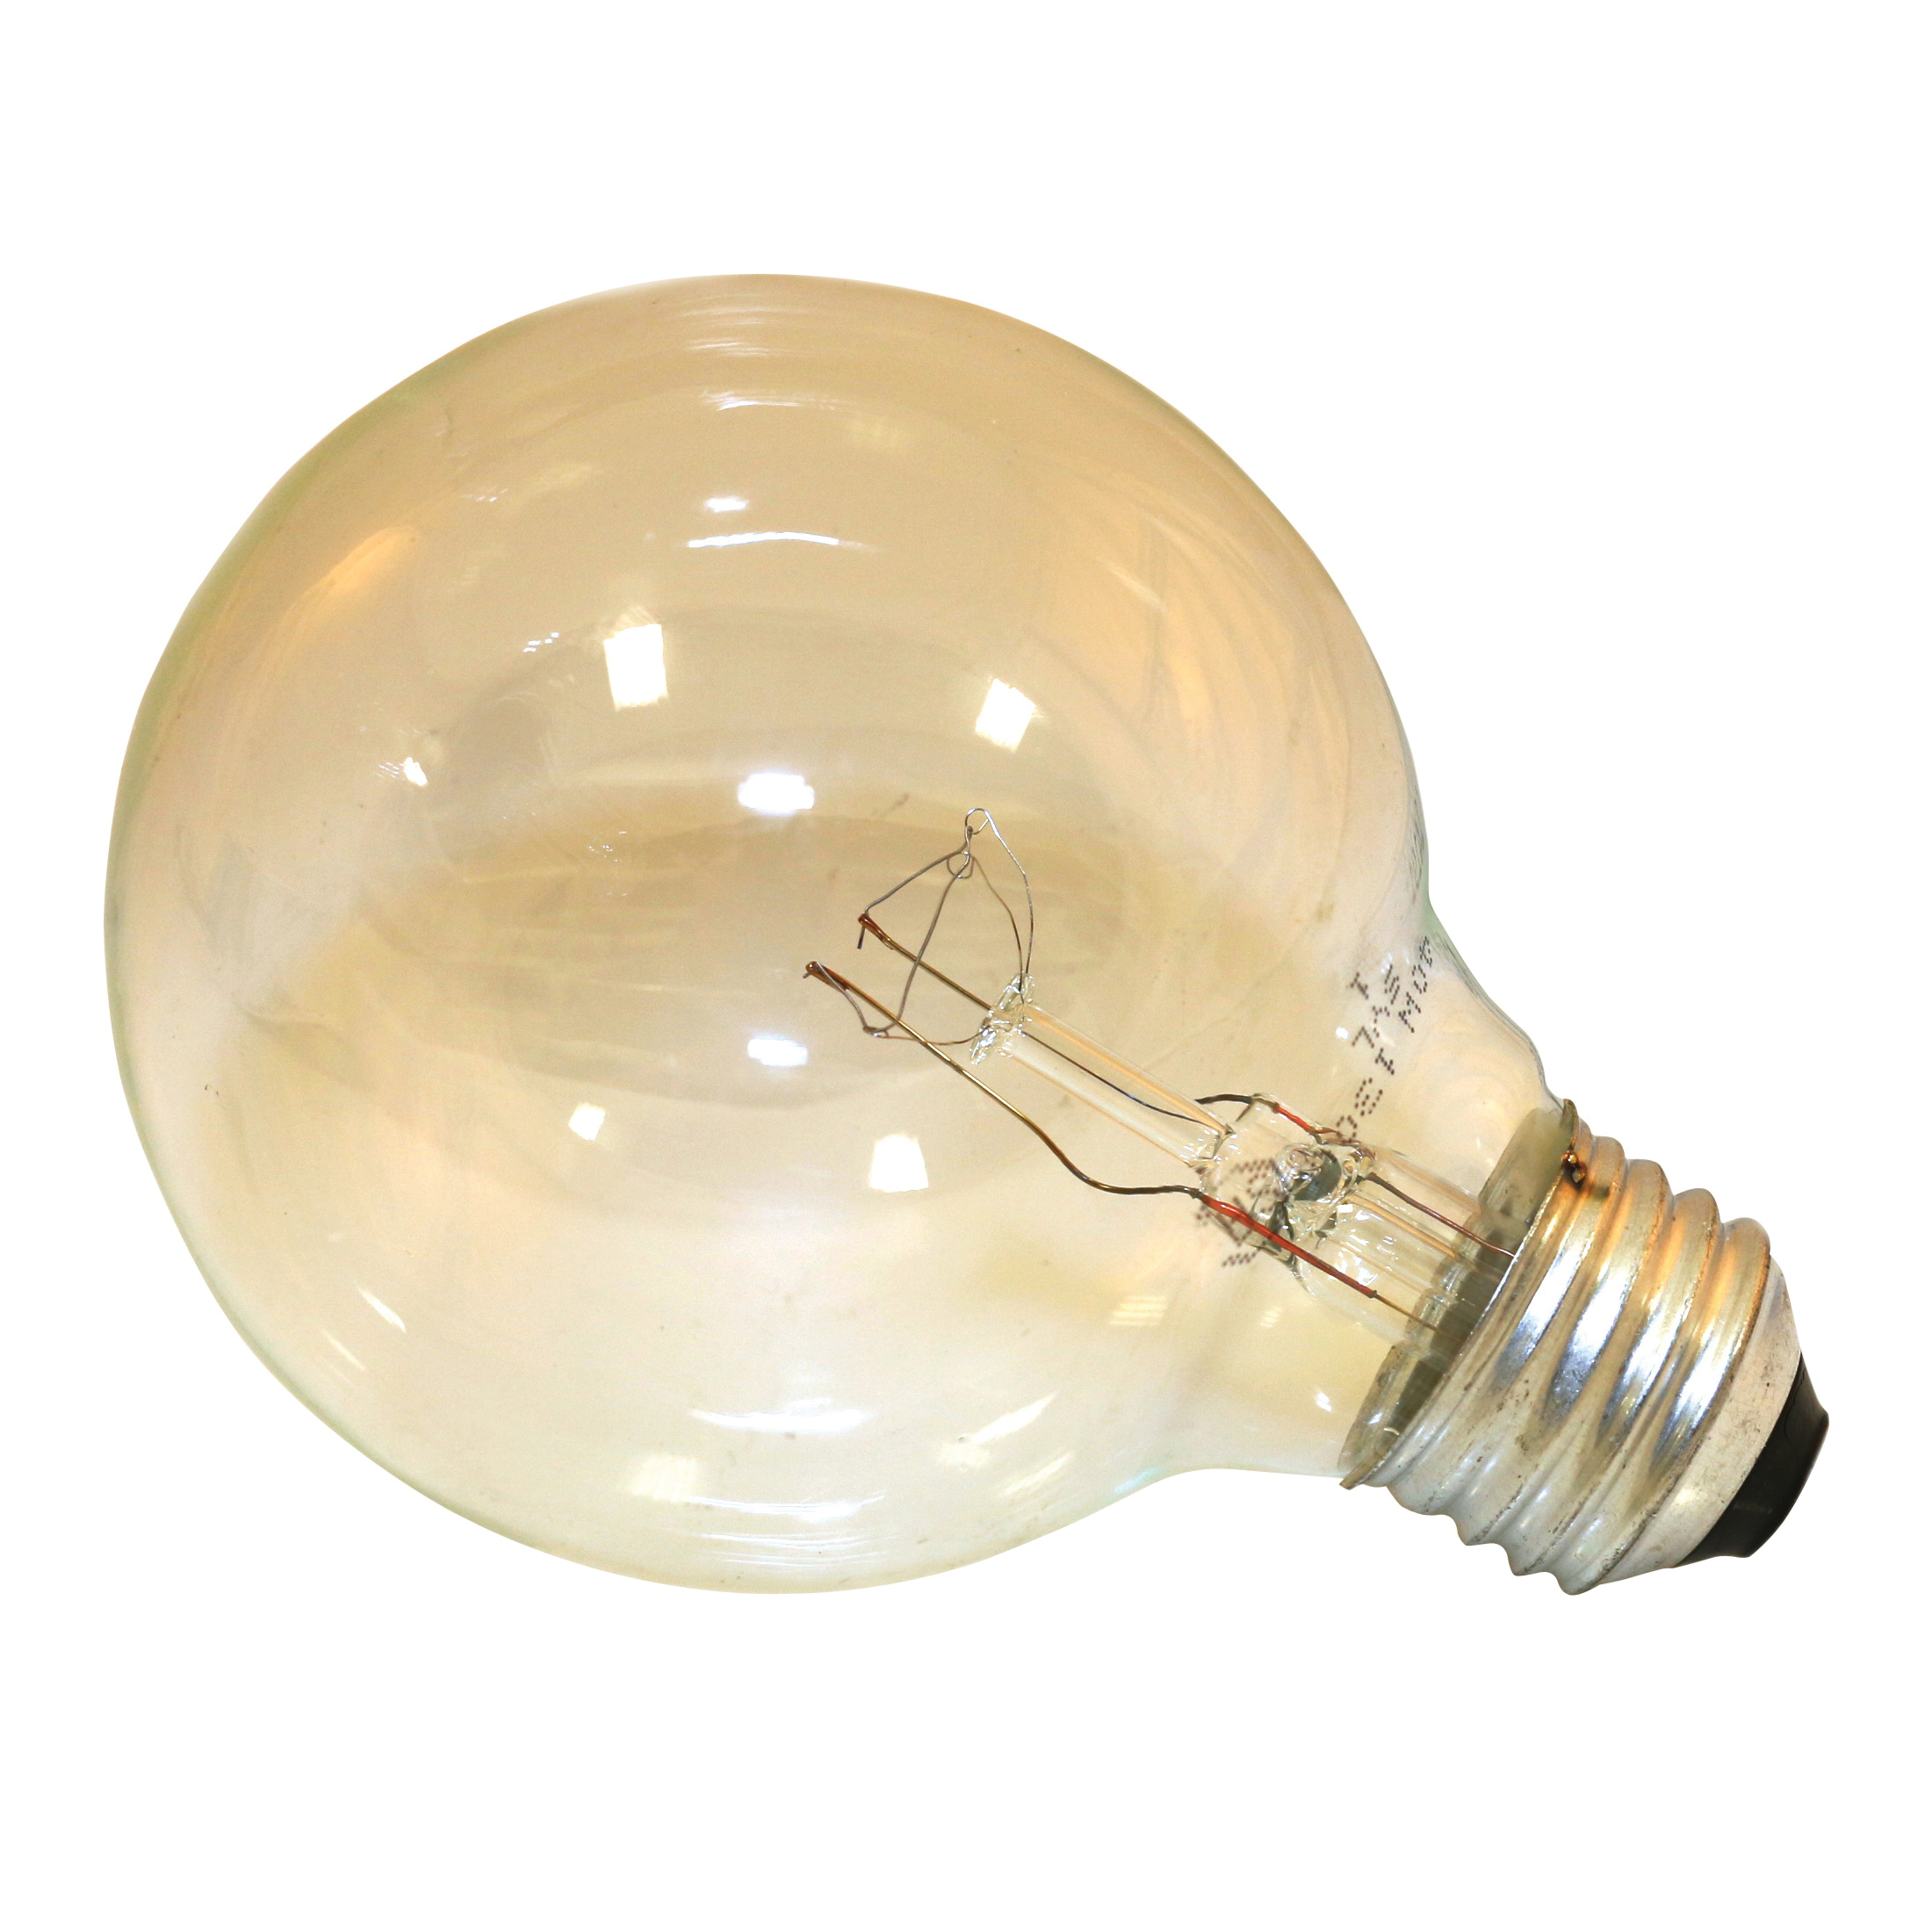 14191 Incandescent Bulb, 40 W, G25 Lamp, Medium E27 Lamp Base, 300 Lumens, 2850 K Color Temp